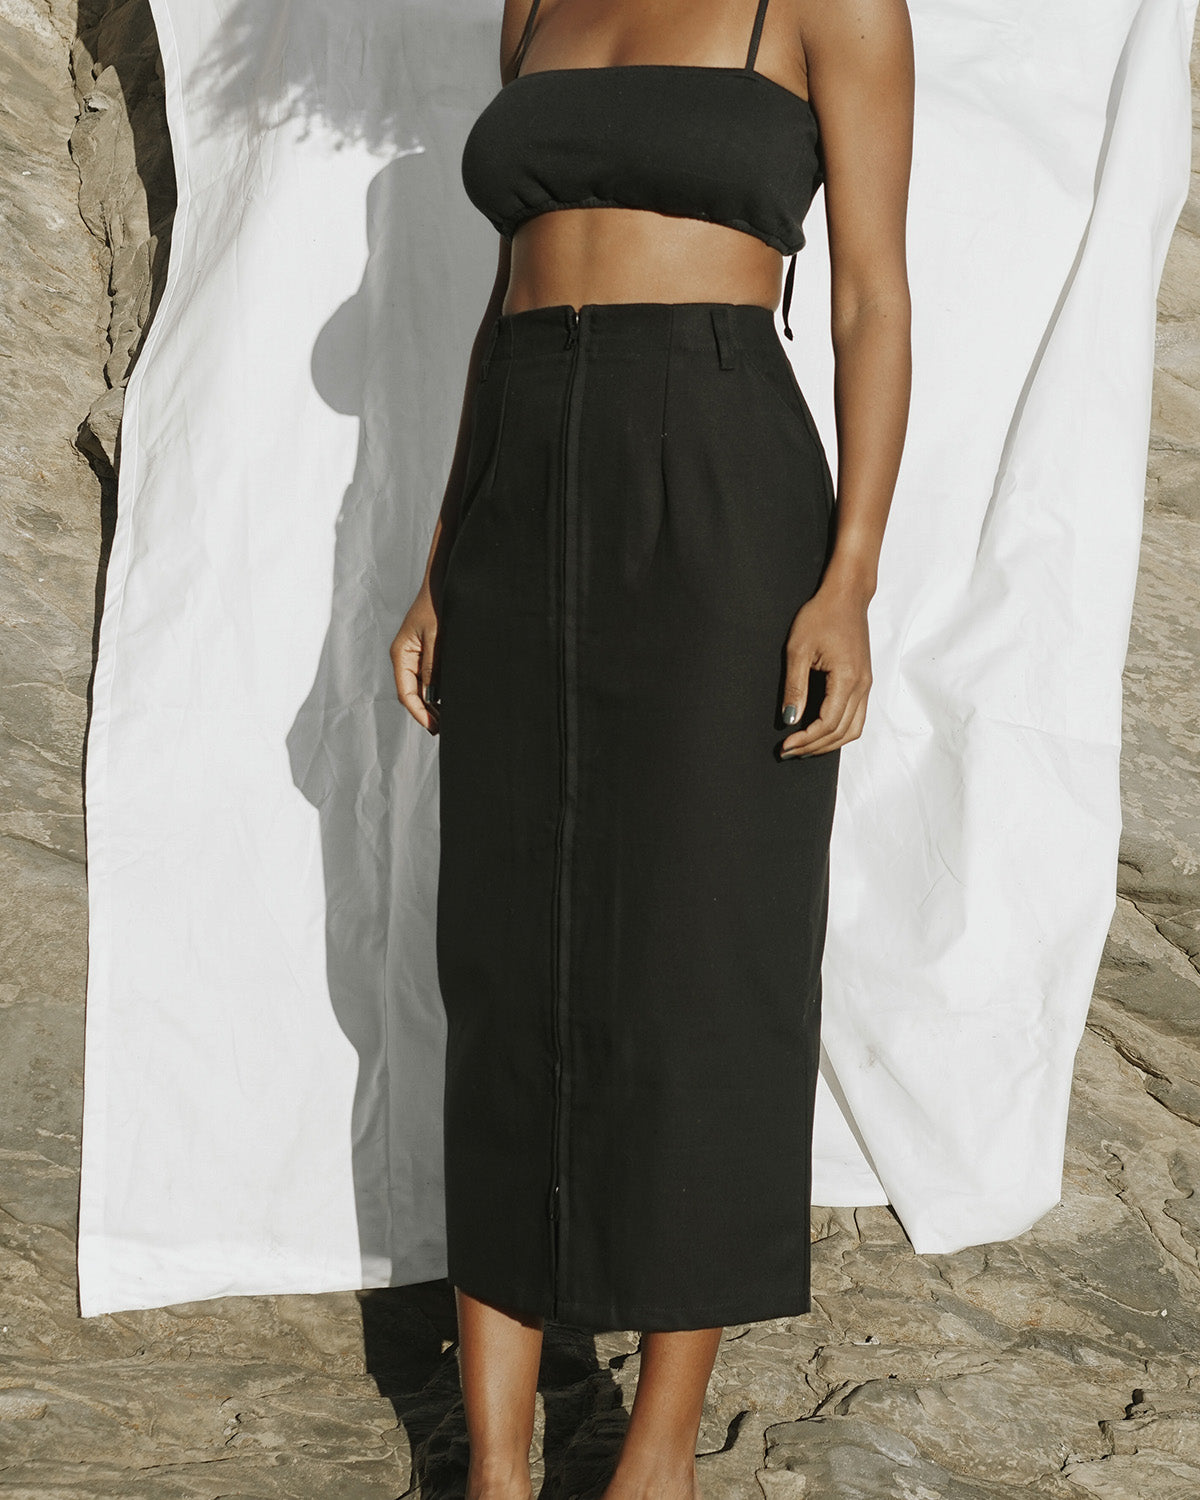 Reflective Zip-Up Mini Skirt, 55% OFF